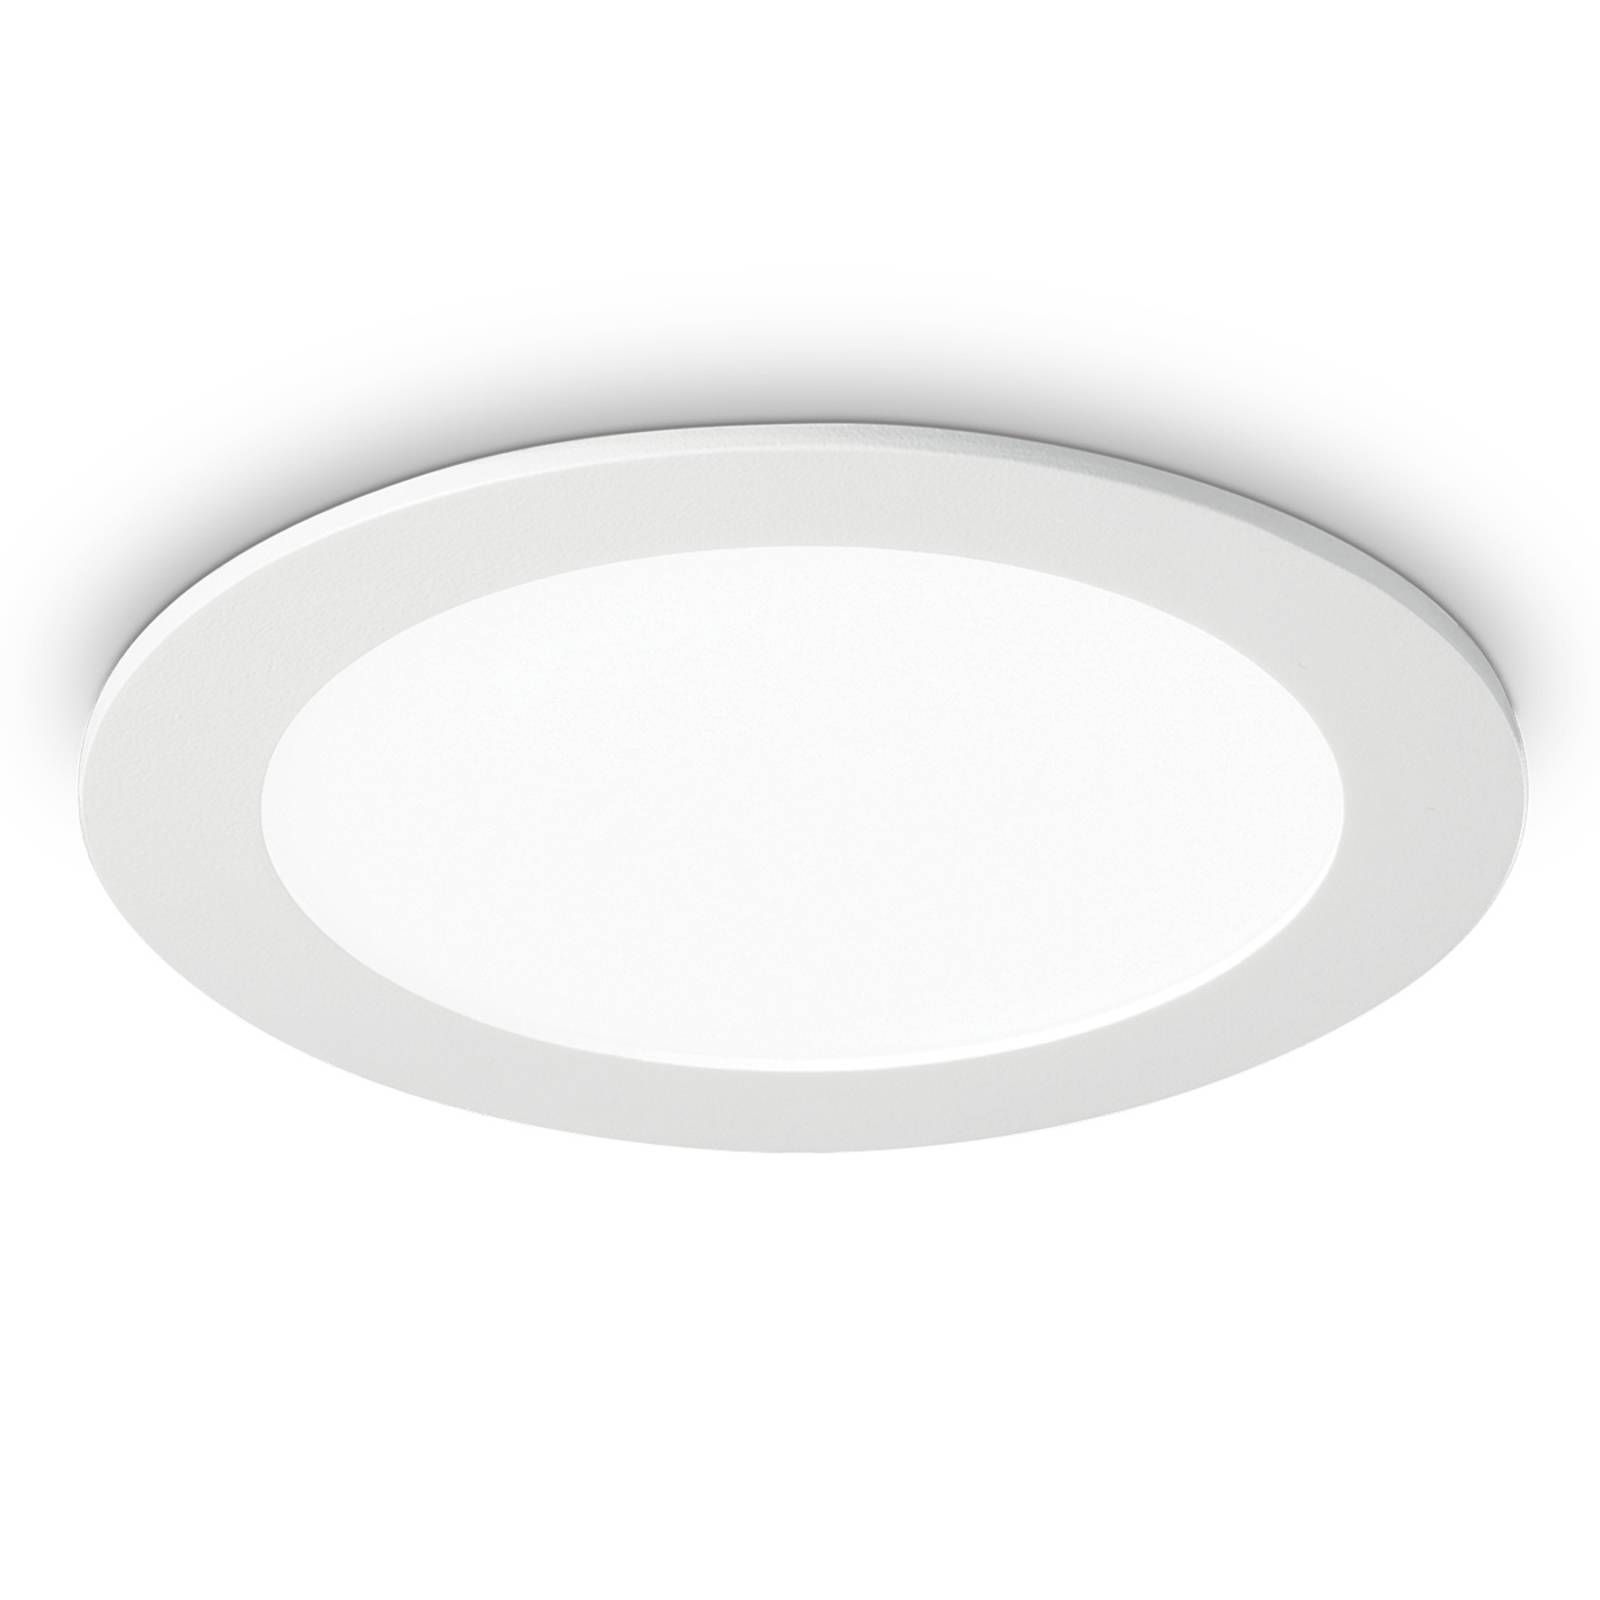 Ideallux Stropné LED svetlo Groove round 3 000 K 22, 7 cm, Obývacia izba / jedáleň, hliník, plast, 30W, Energialuokka: F